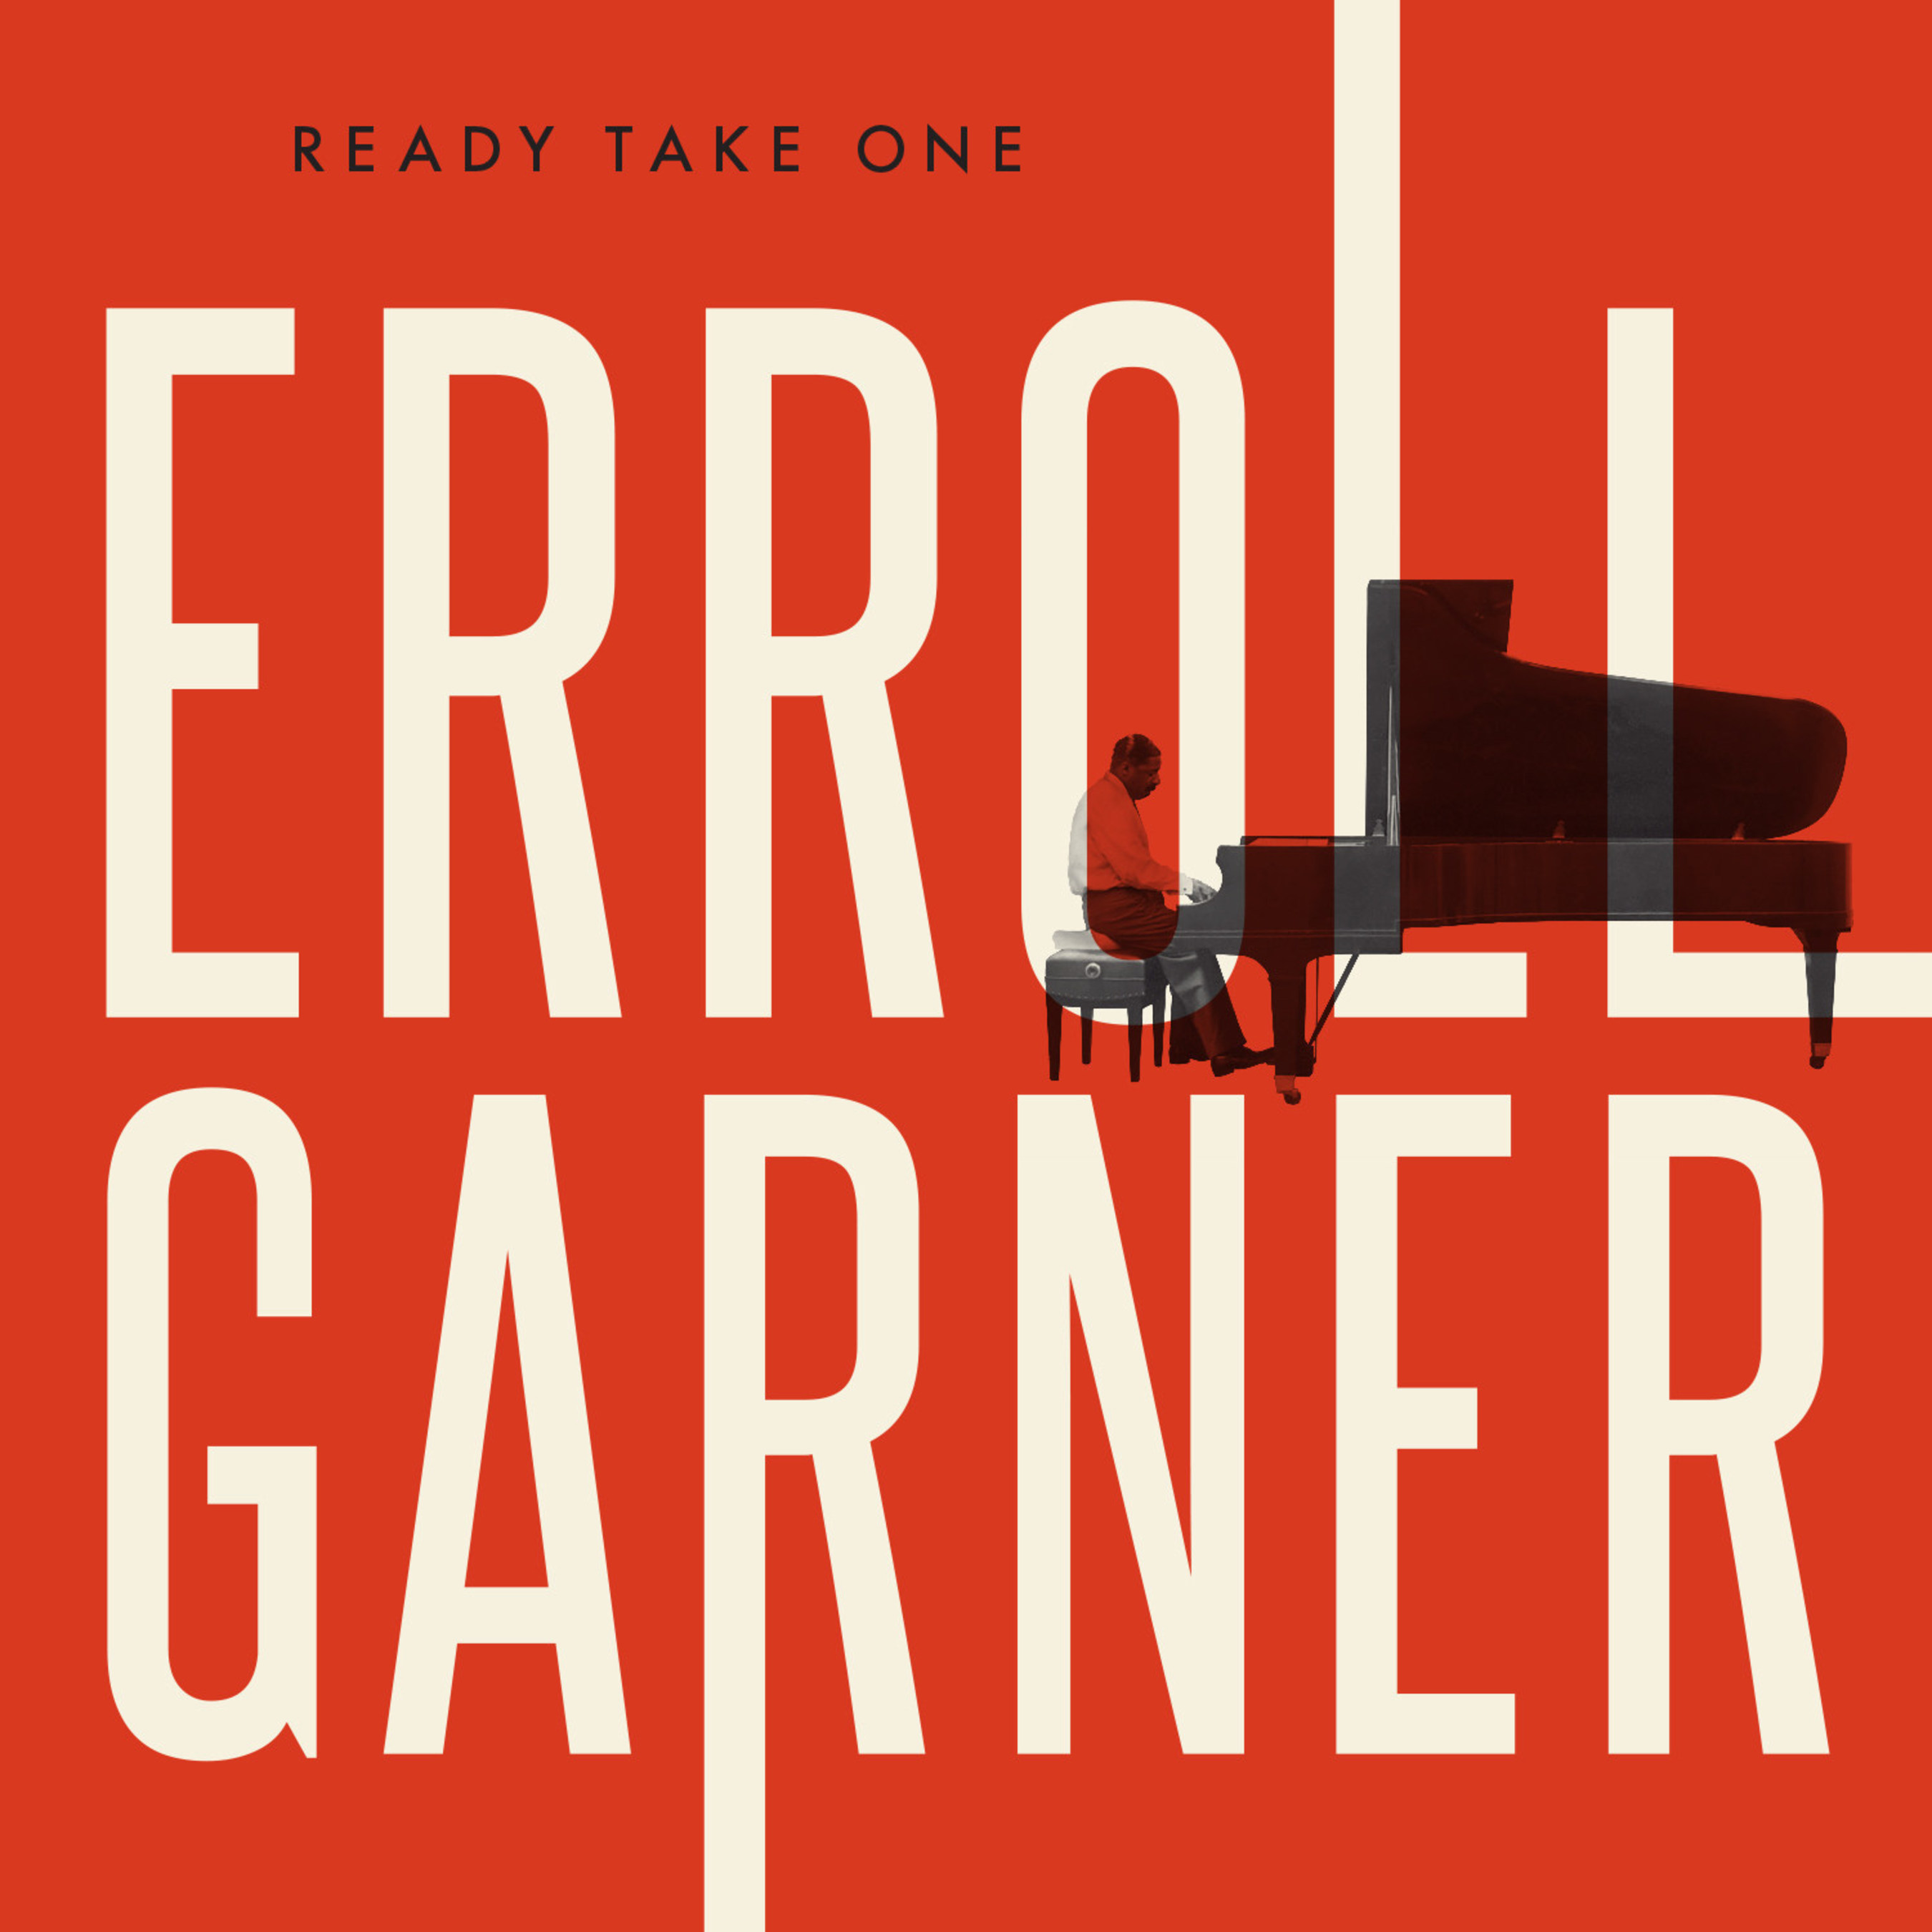 Erroll Garner "Ready Take One" Cover Art